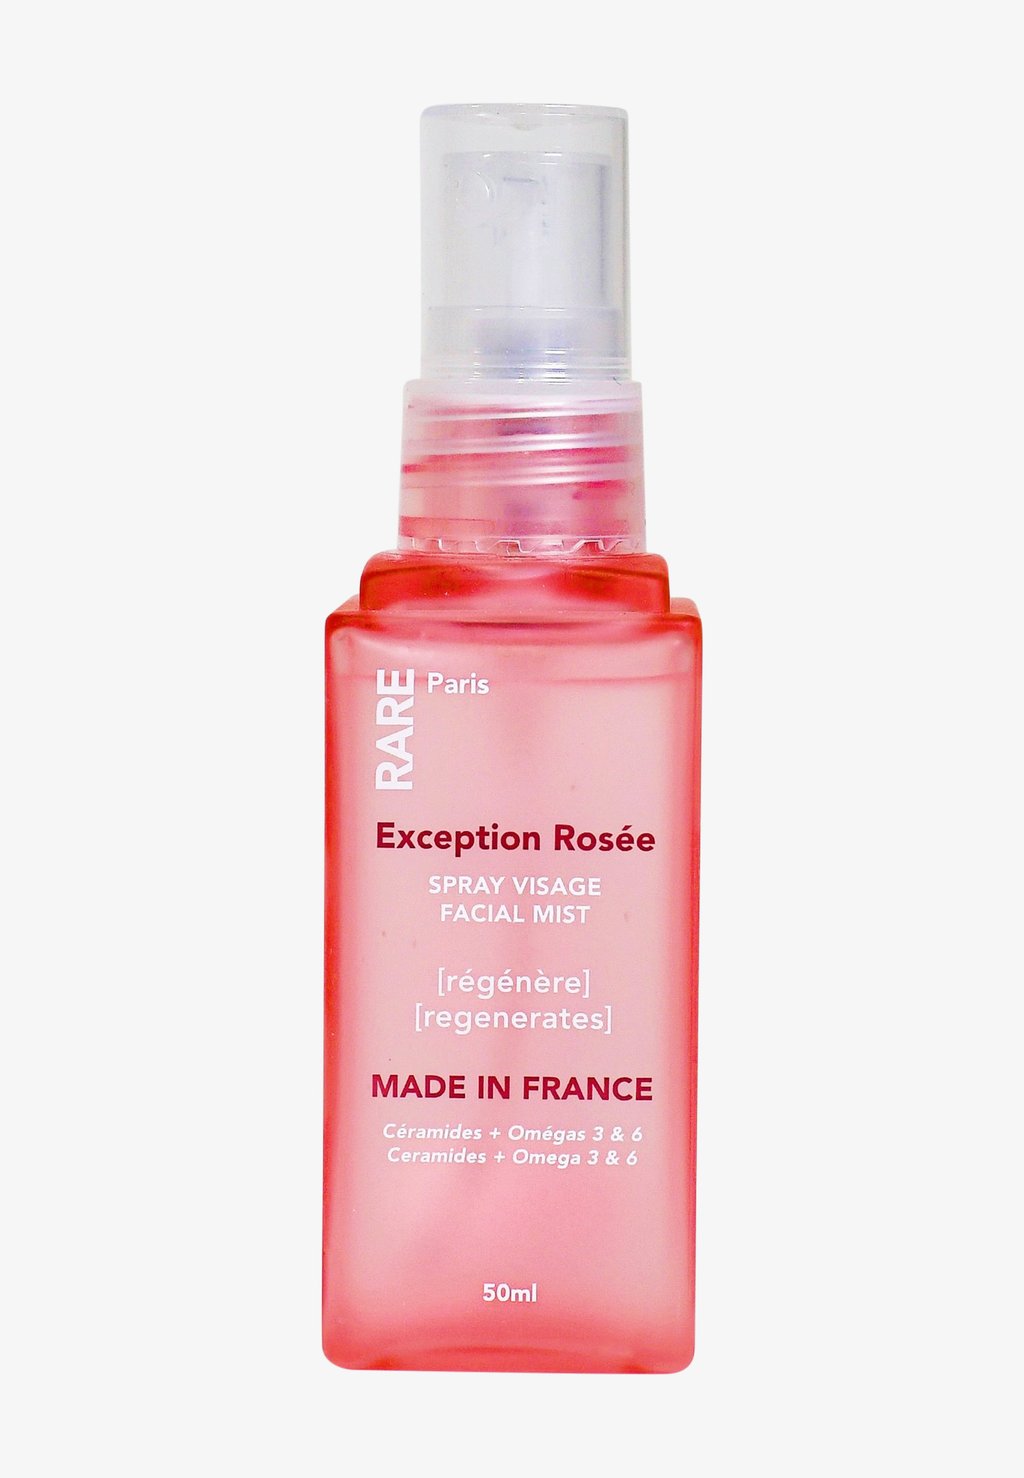 Сыворотка Exception Rosee Facial Mist Rare Paris, розовый rare paris exception rosée regenerating facial mist